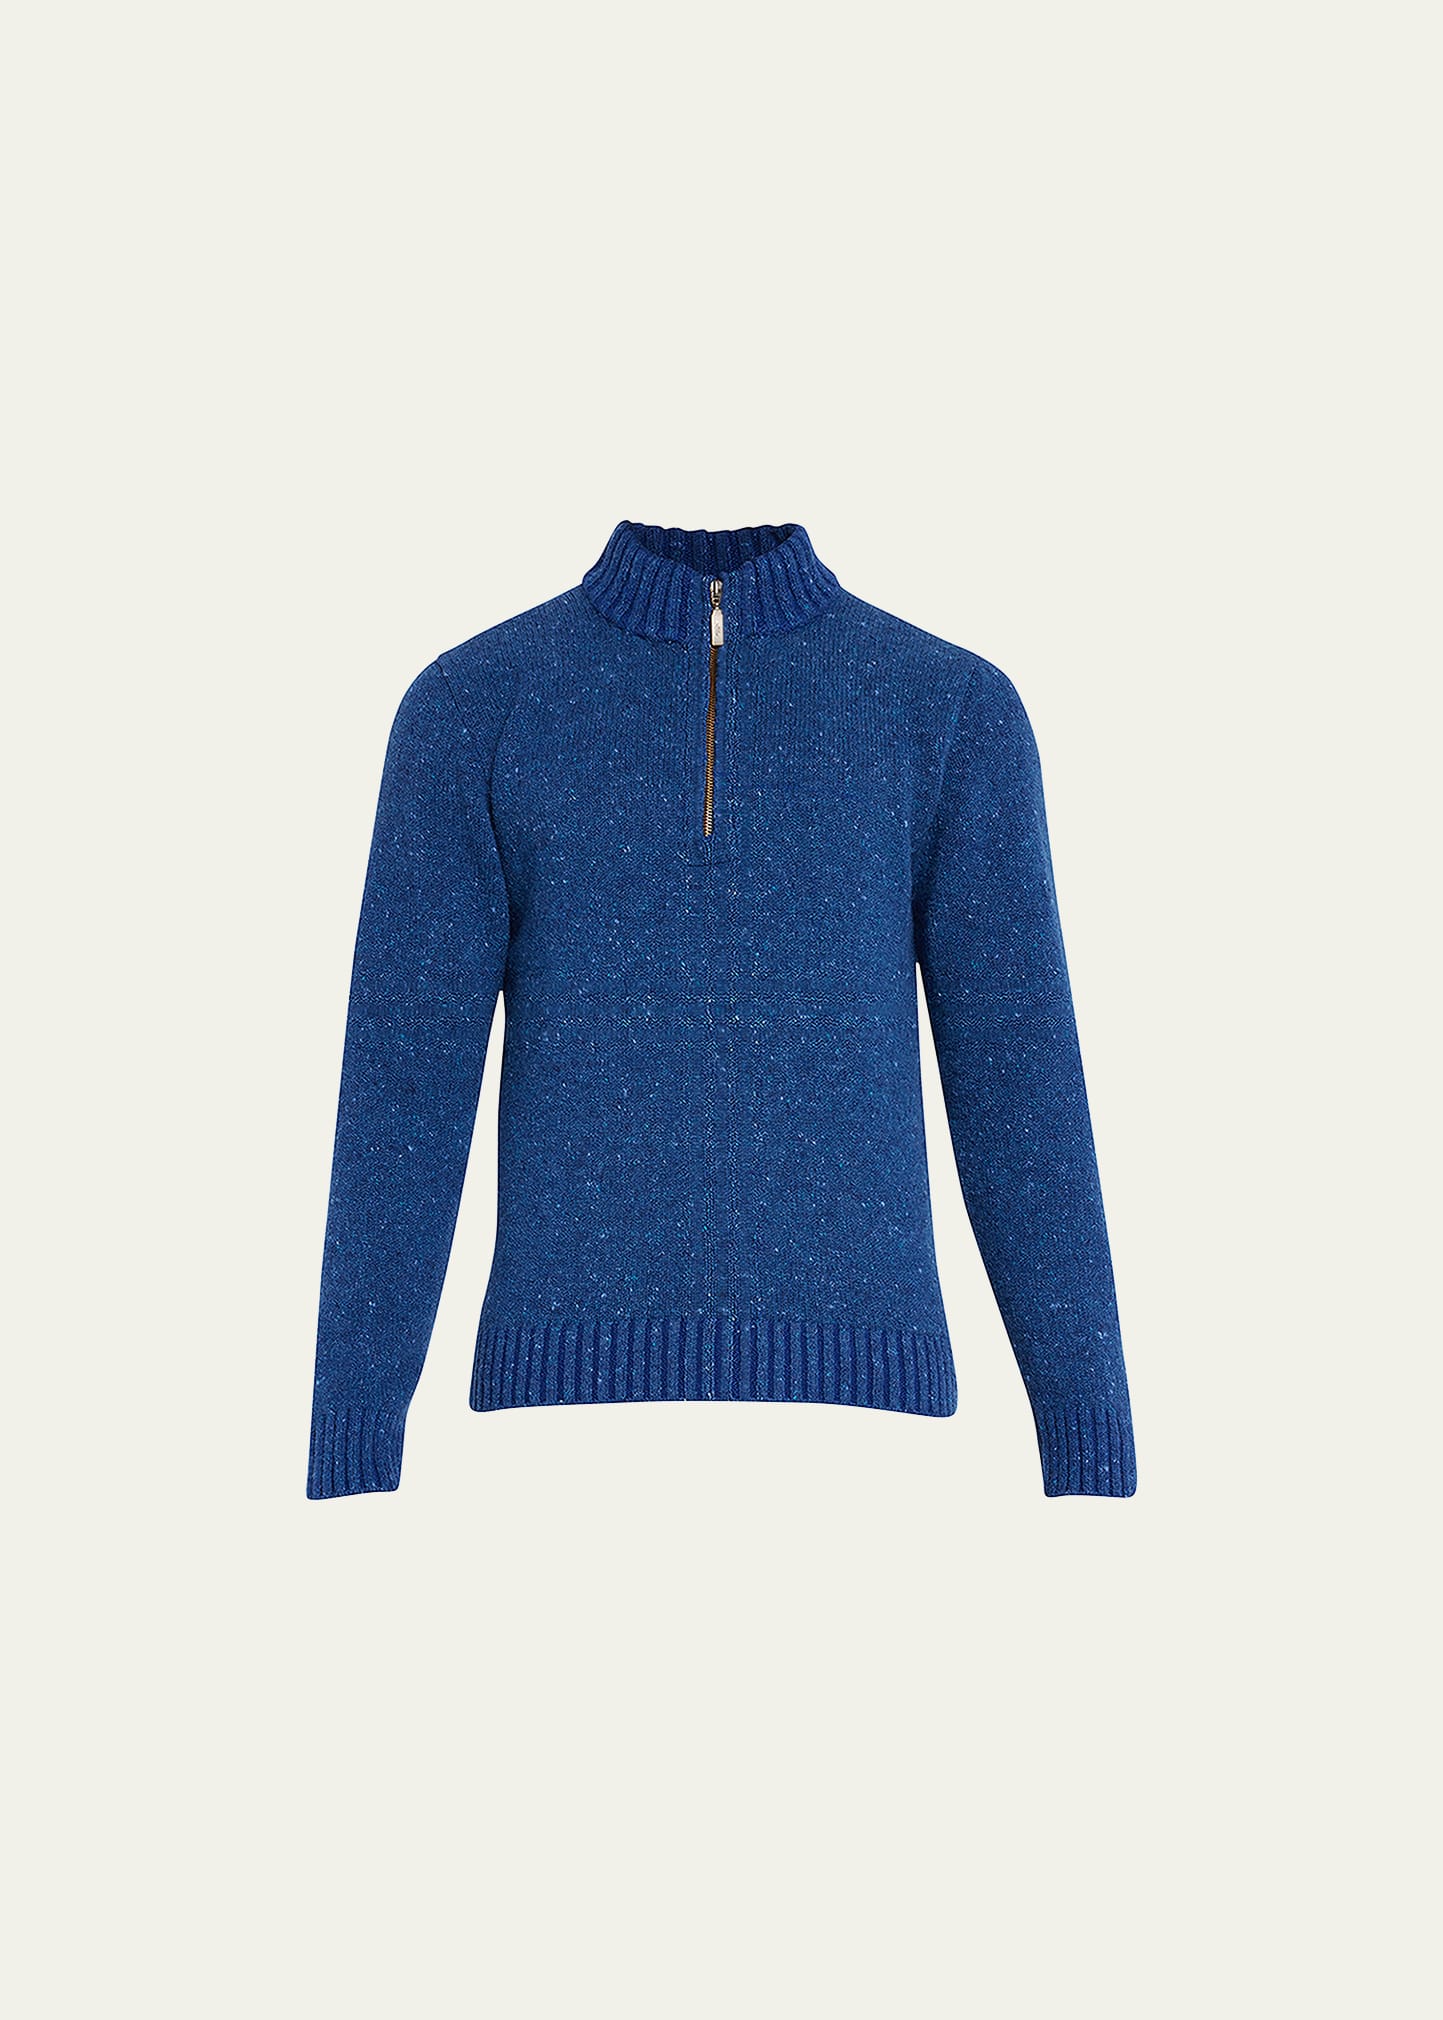 Inis Meain Men's Wool-Cashmere Half-Zip Sweater